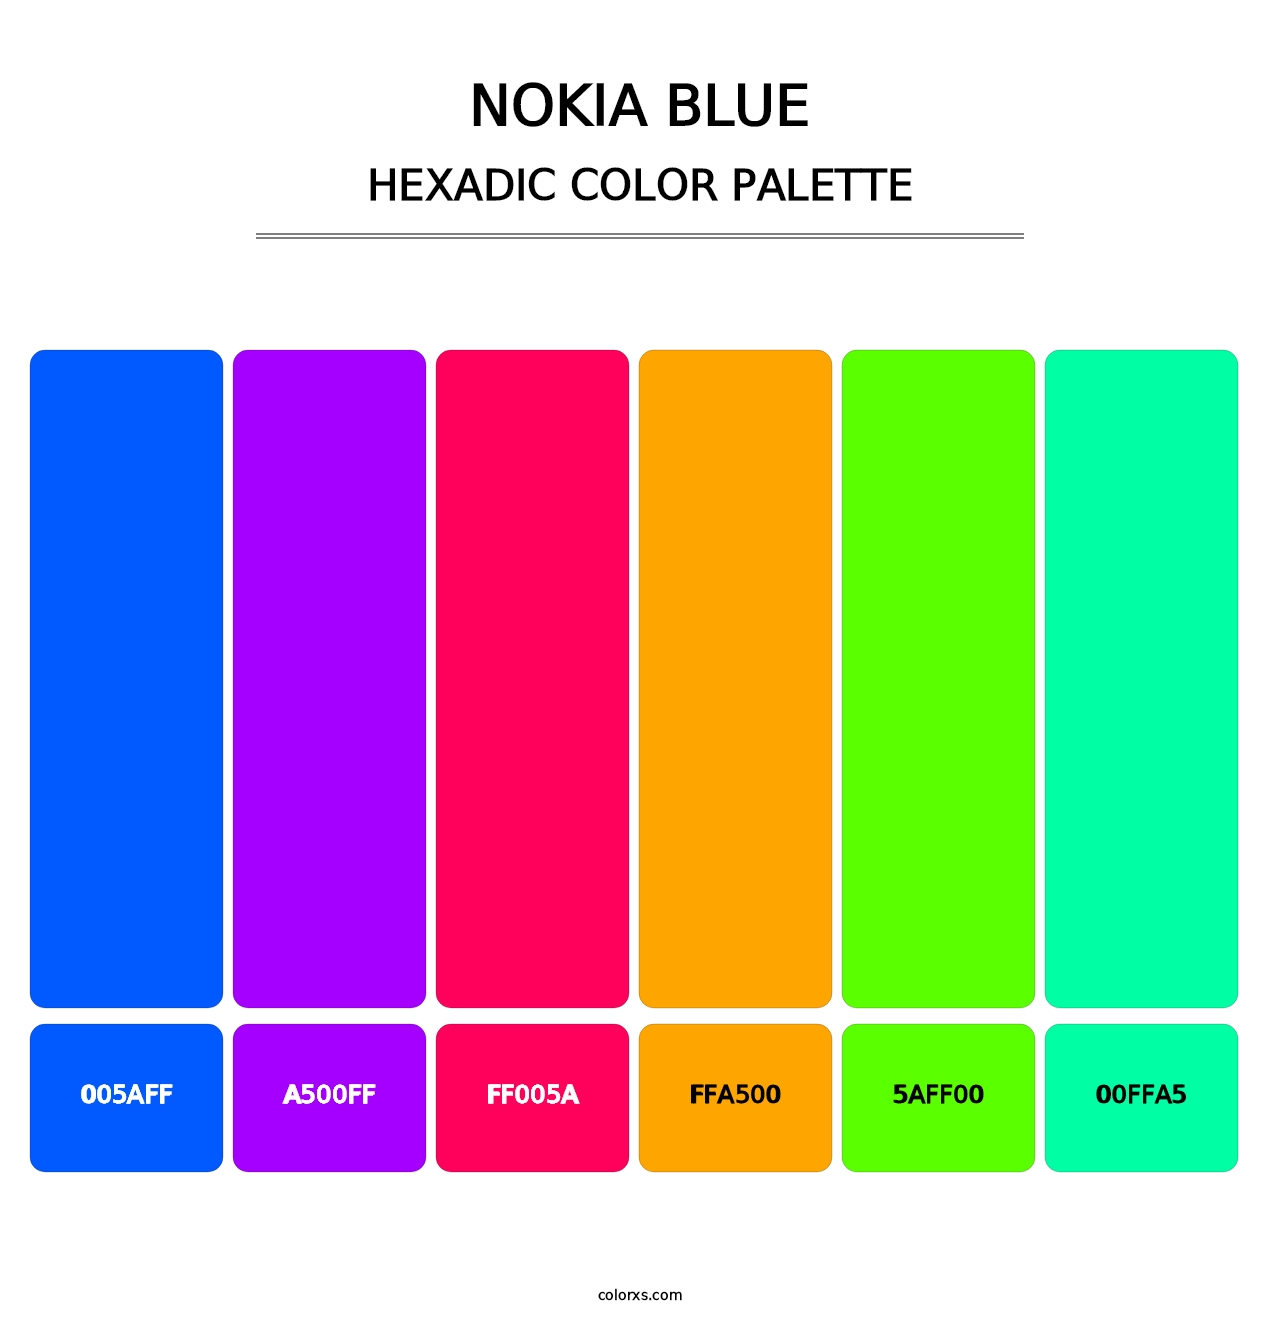 Nokia Blue - Hexadic Color Palette